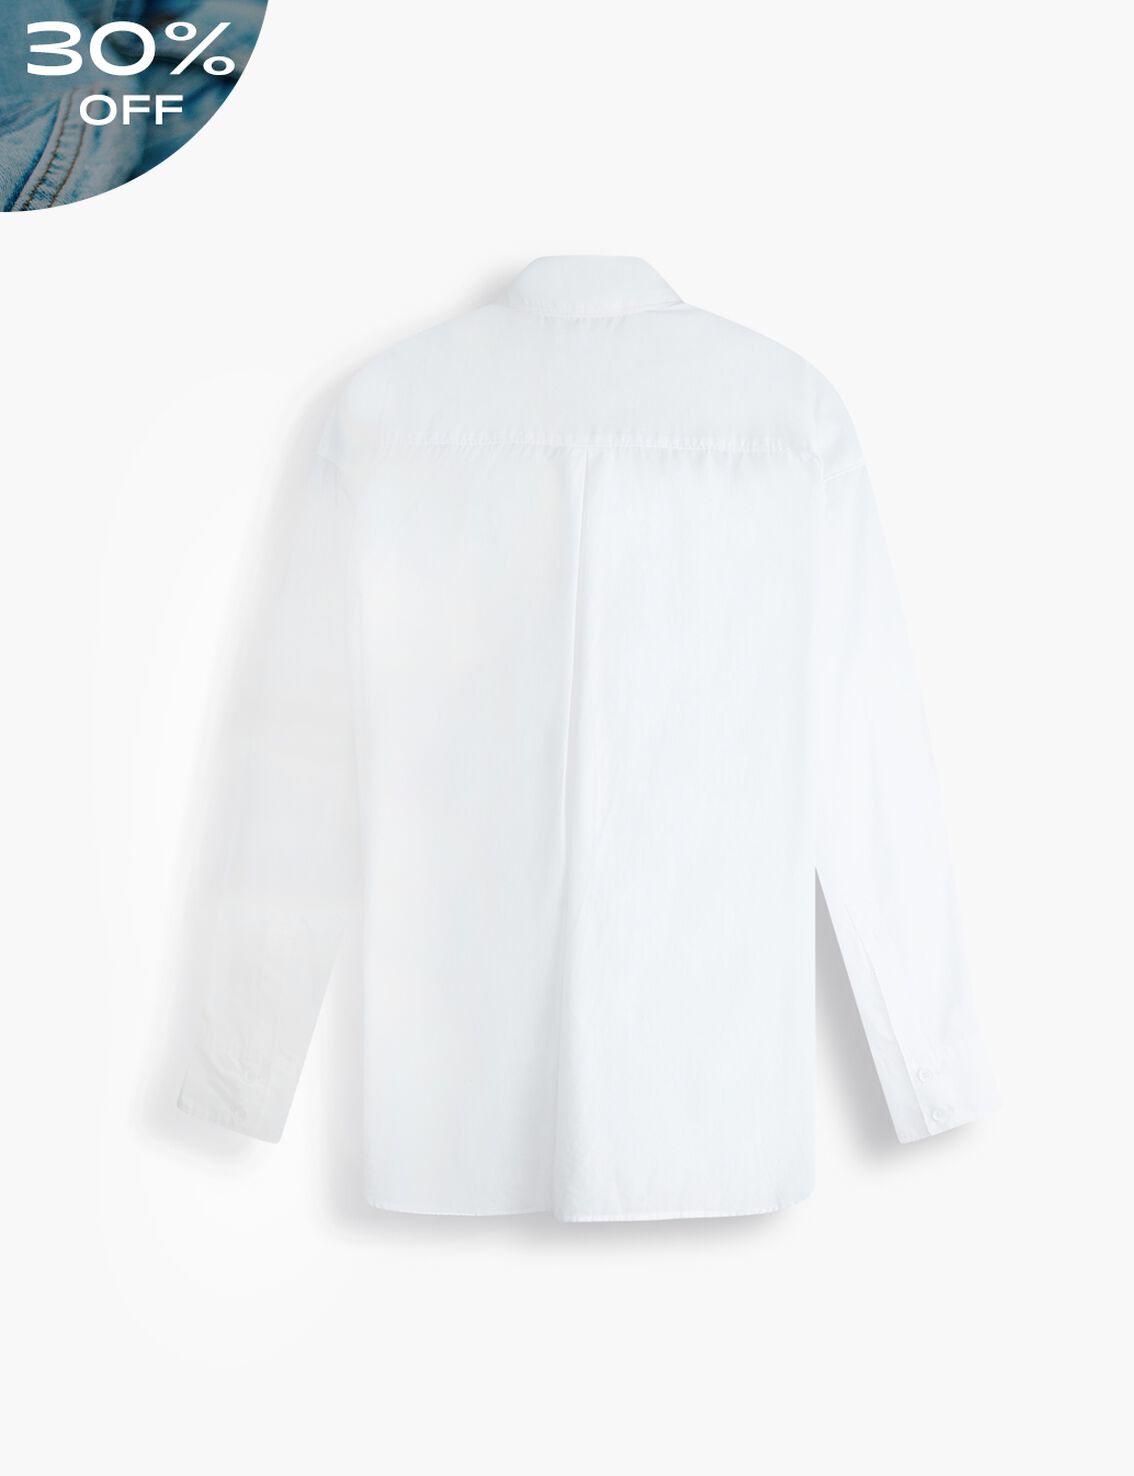 Nola Menswear Shirt in Bright White